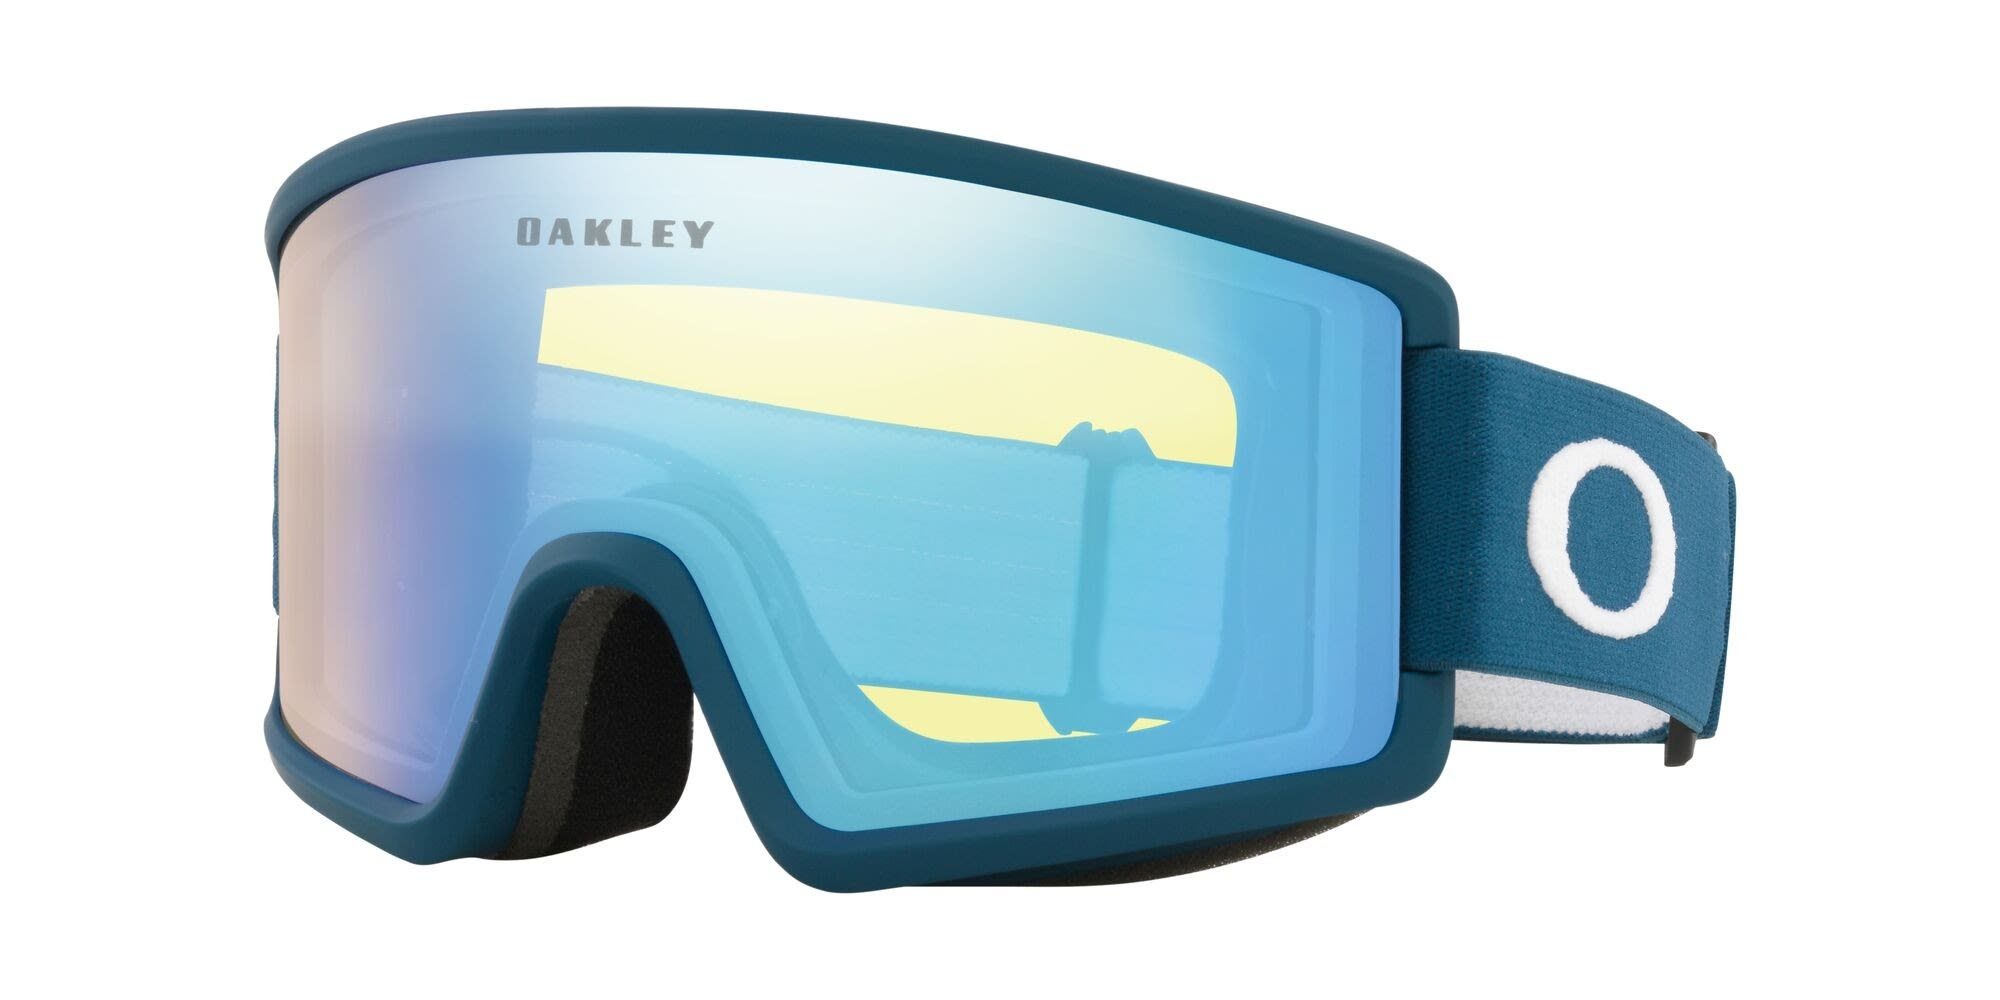 Oakley - Blue Yellow Skibrille Hi